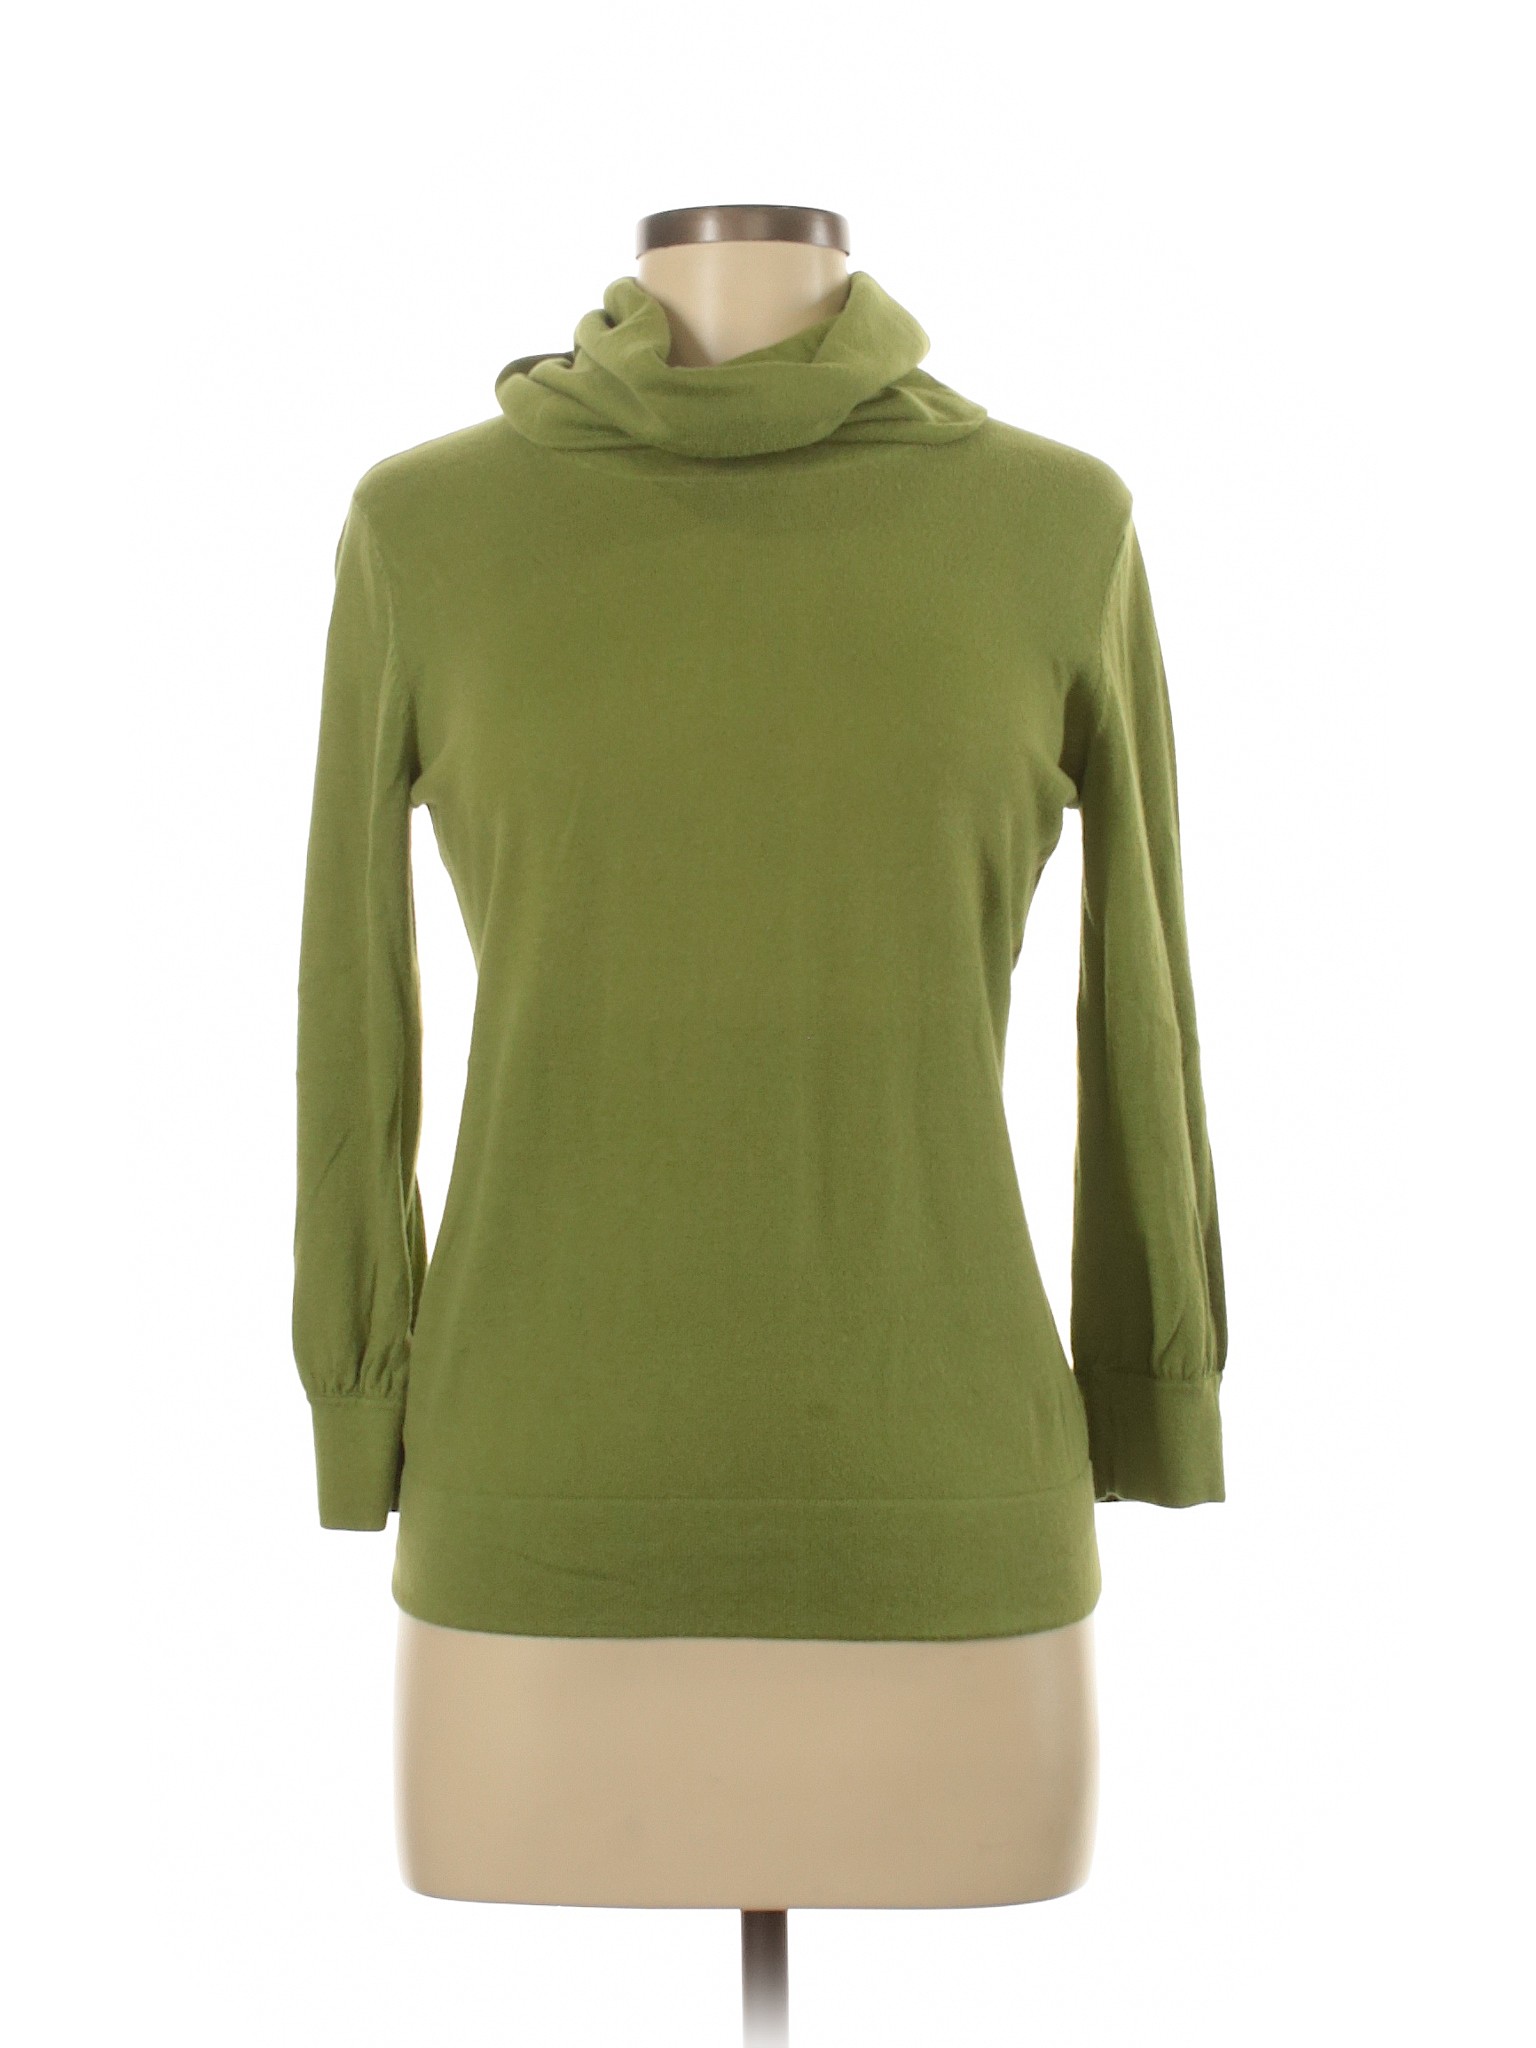 Merona Women Green Turtleneck Sweater M | eBay